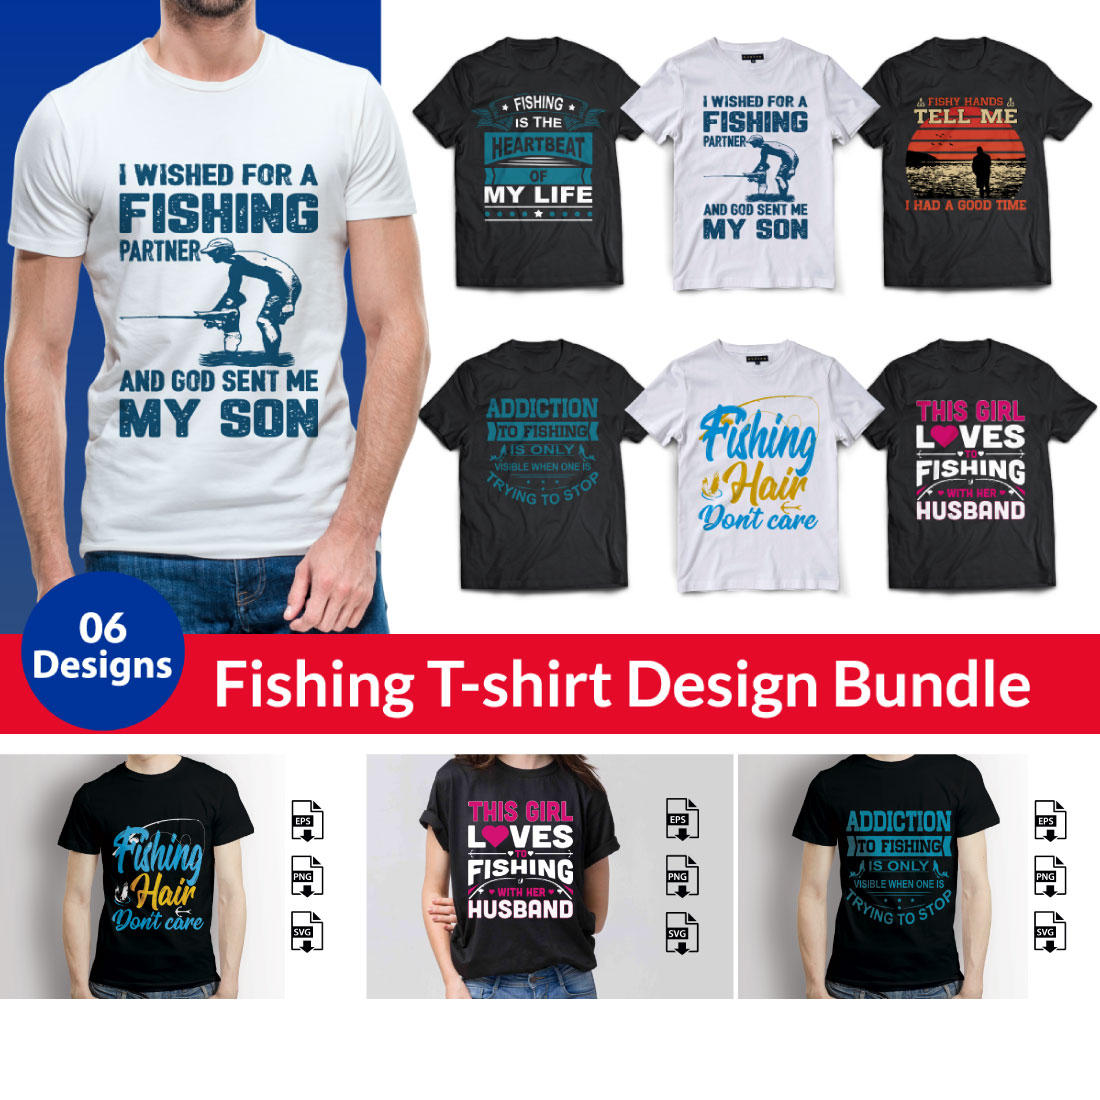 Fishing T-shirt Design Bundle 06 Design cover image.